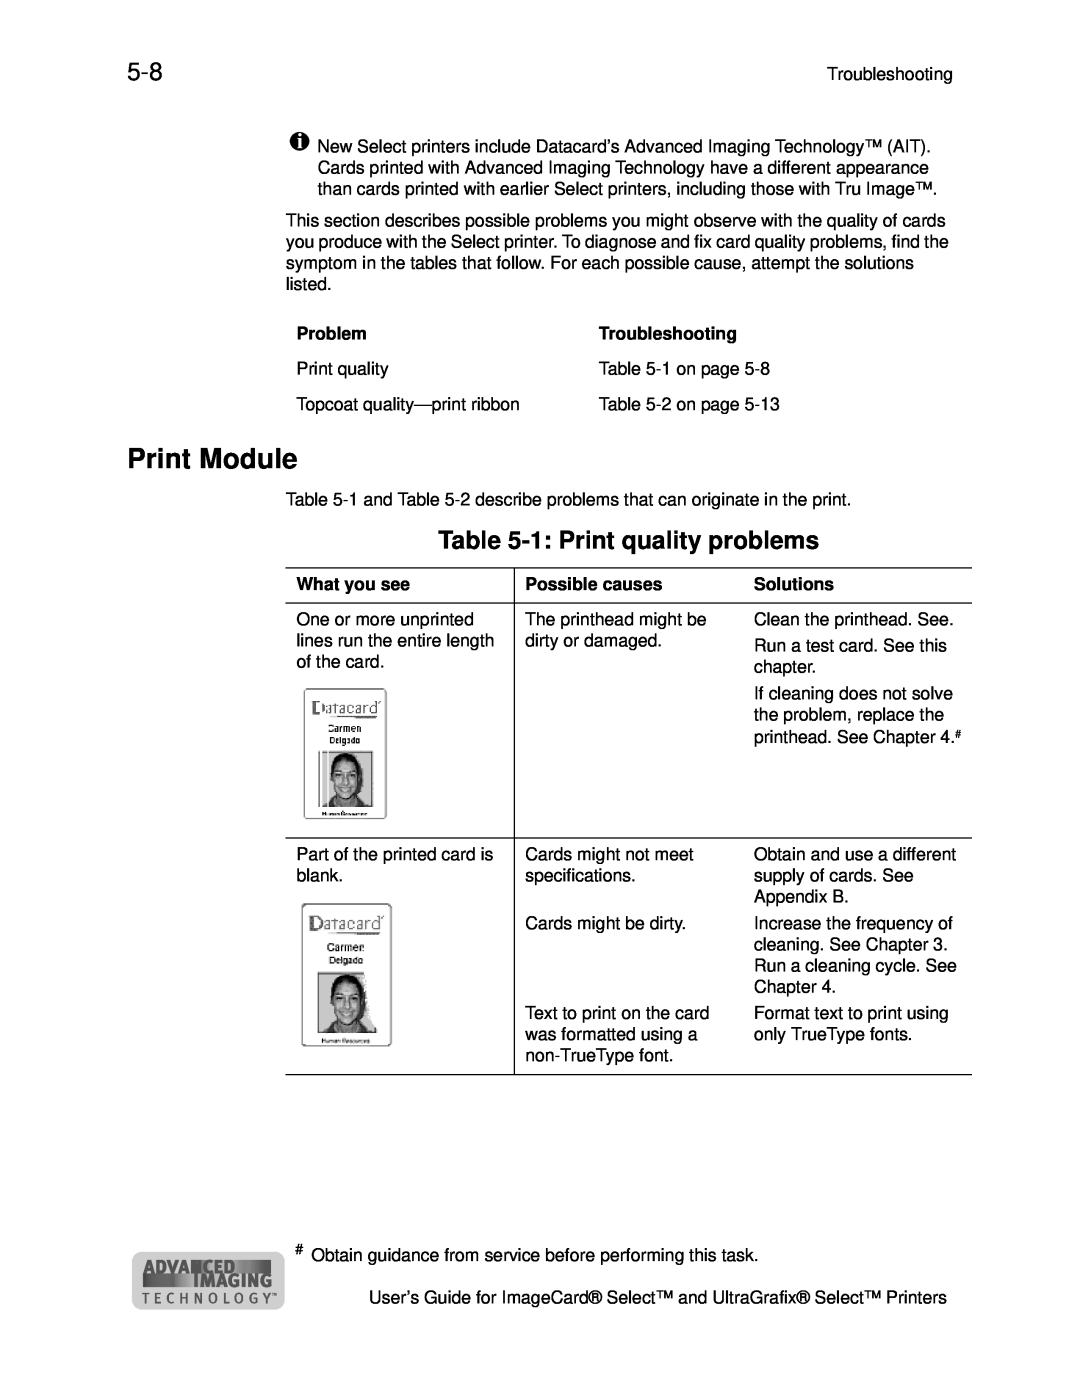 Datacard Group ImageCard SelectTM and UltraGrafix SelectTM Printers Print Module, 1 Print quality problems, What you see 